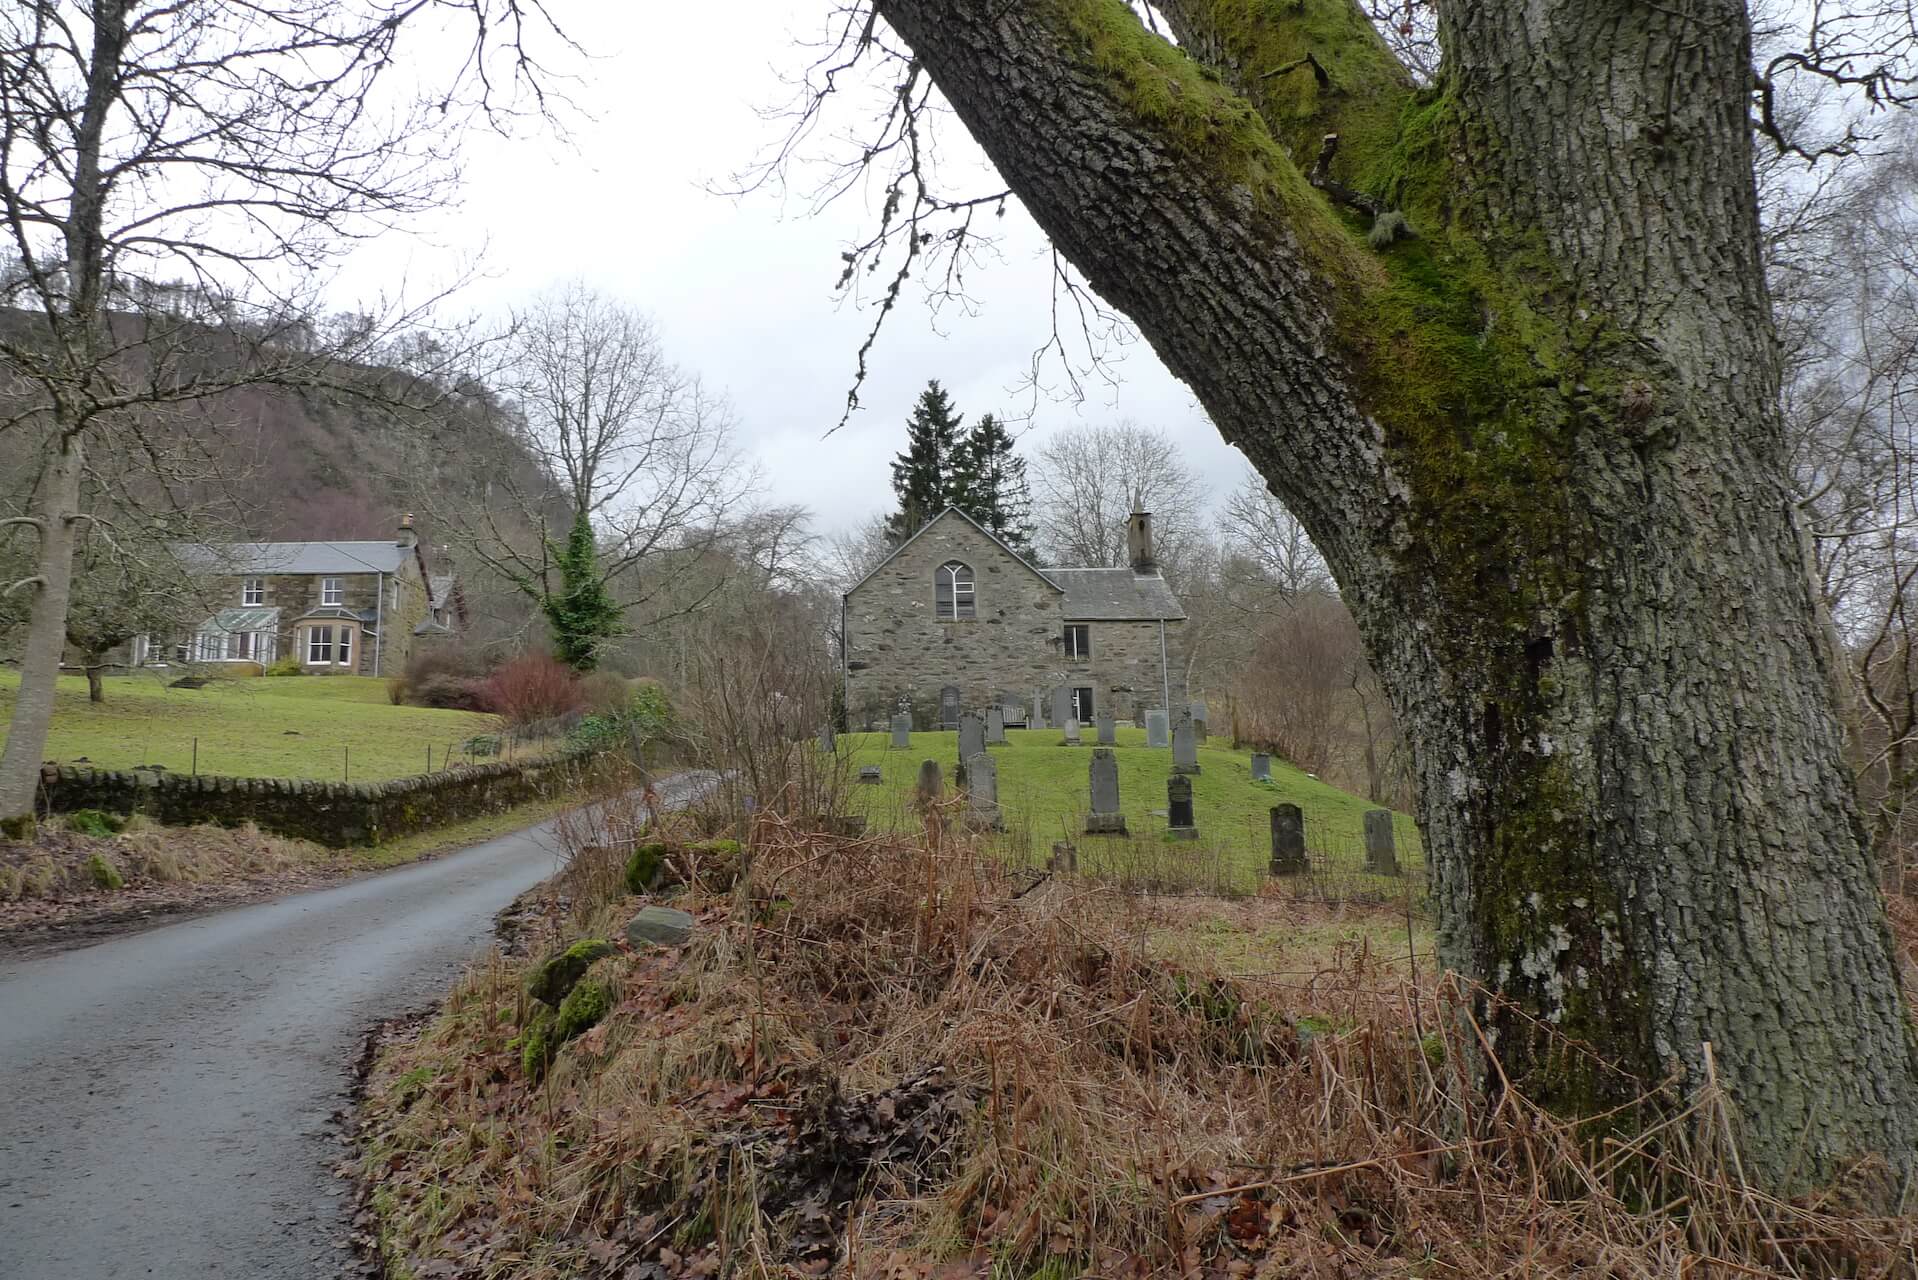 Tenandry Church and Graveyard